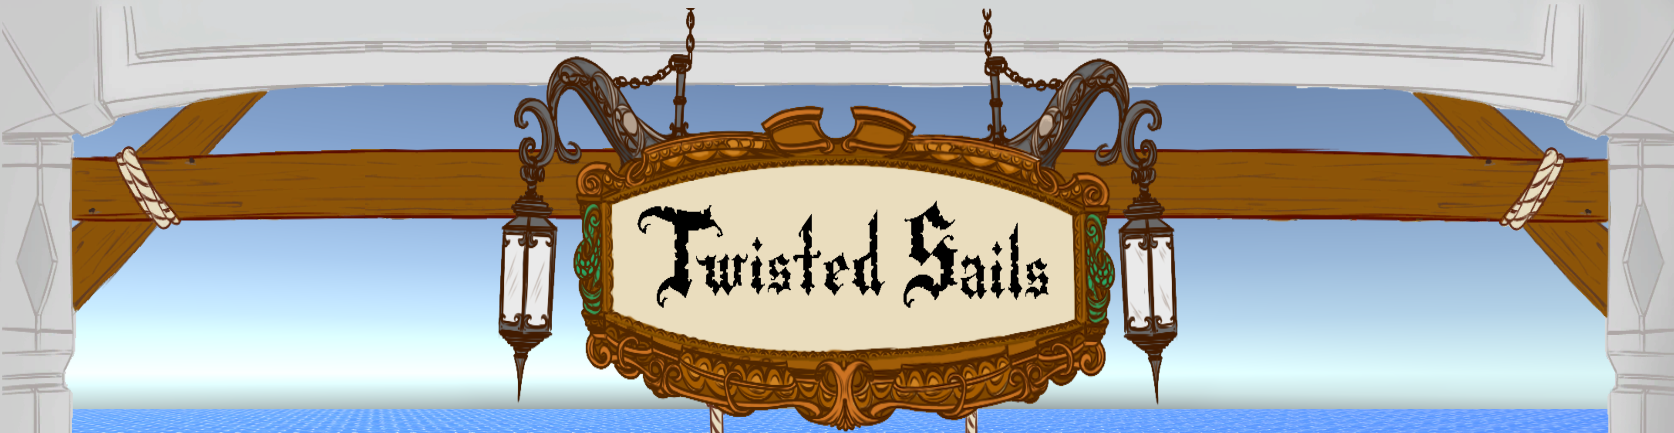 Twisted Sails